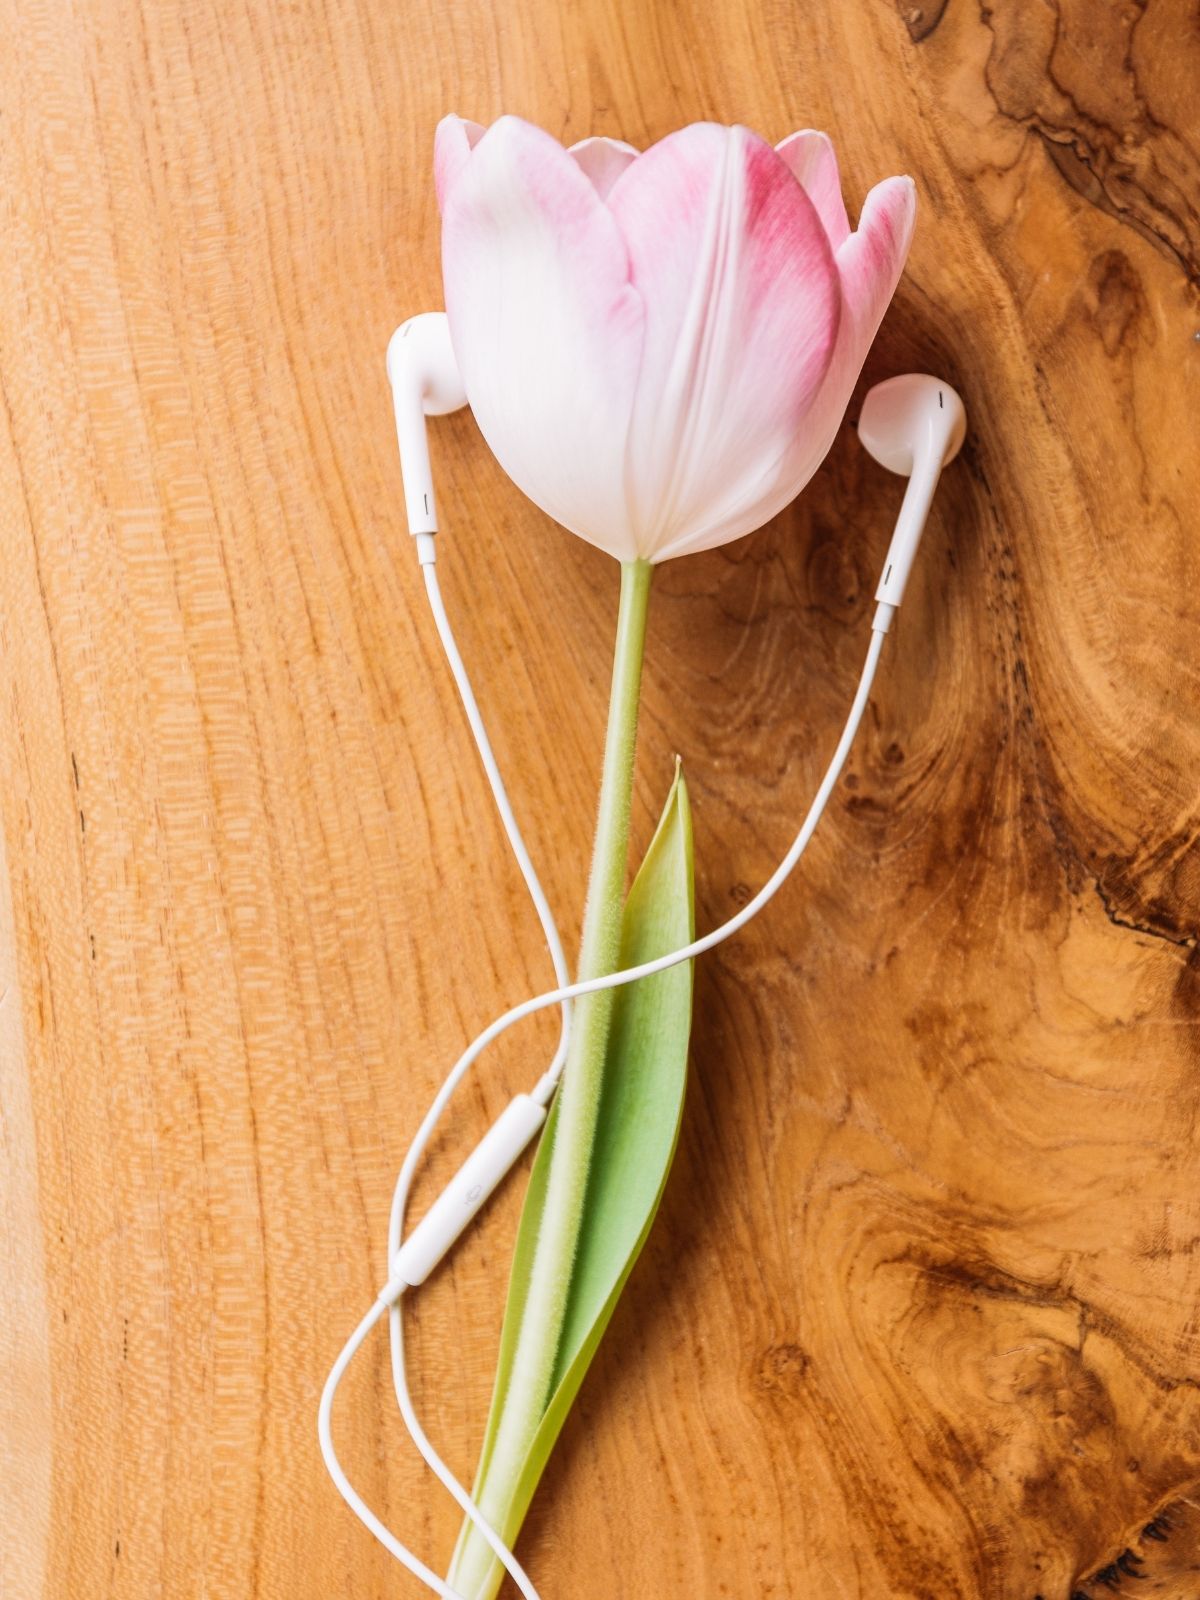 Tulip with headphones - flower farming podcasts on thursd